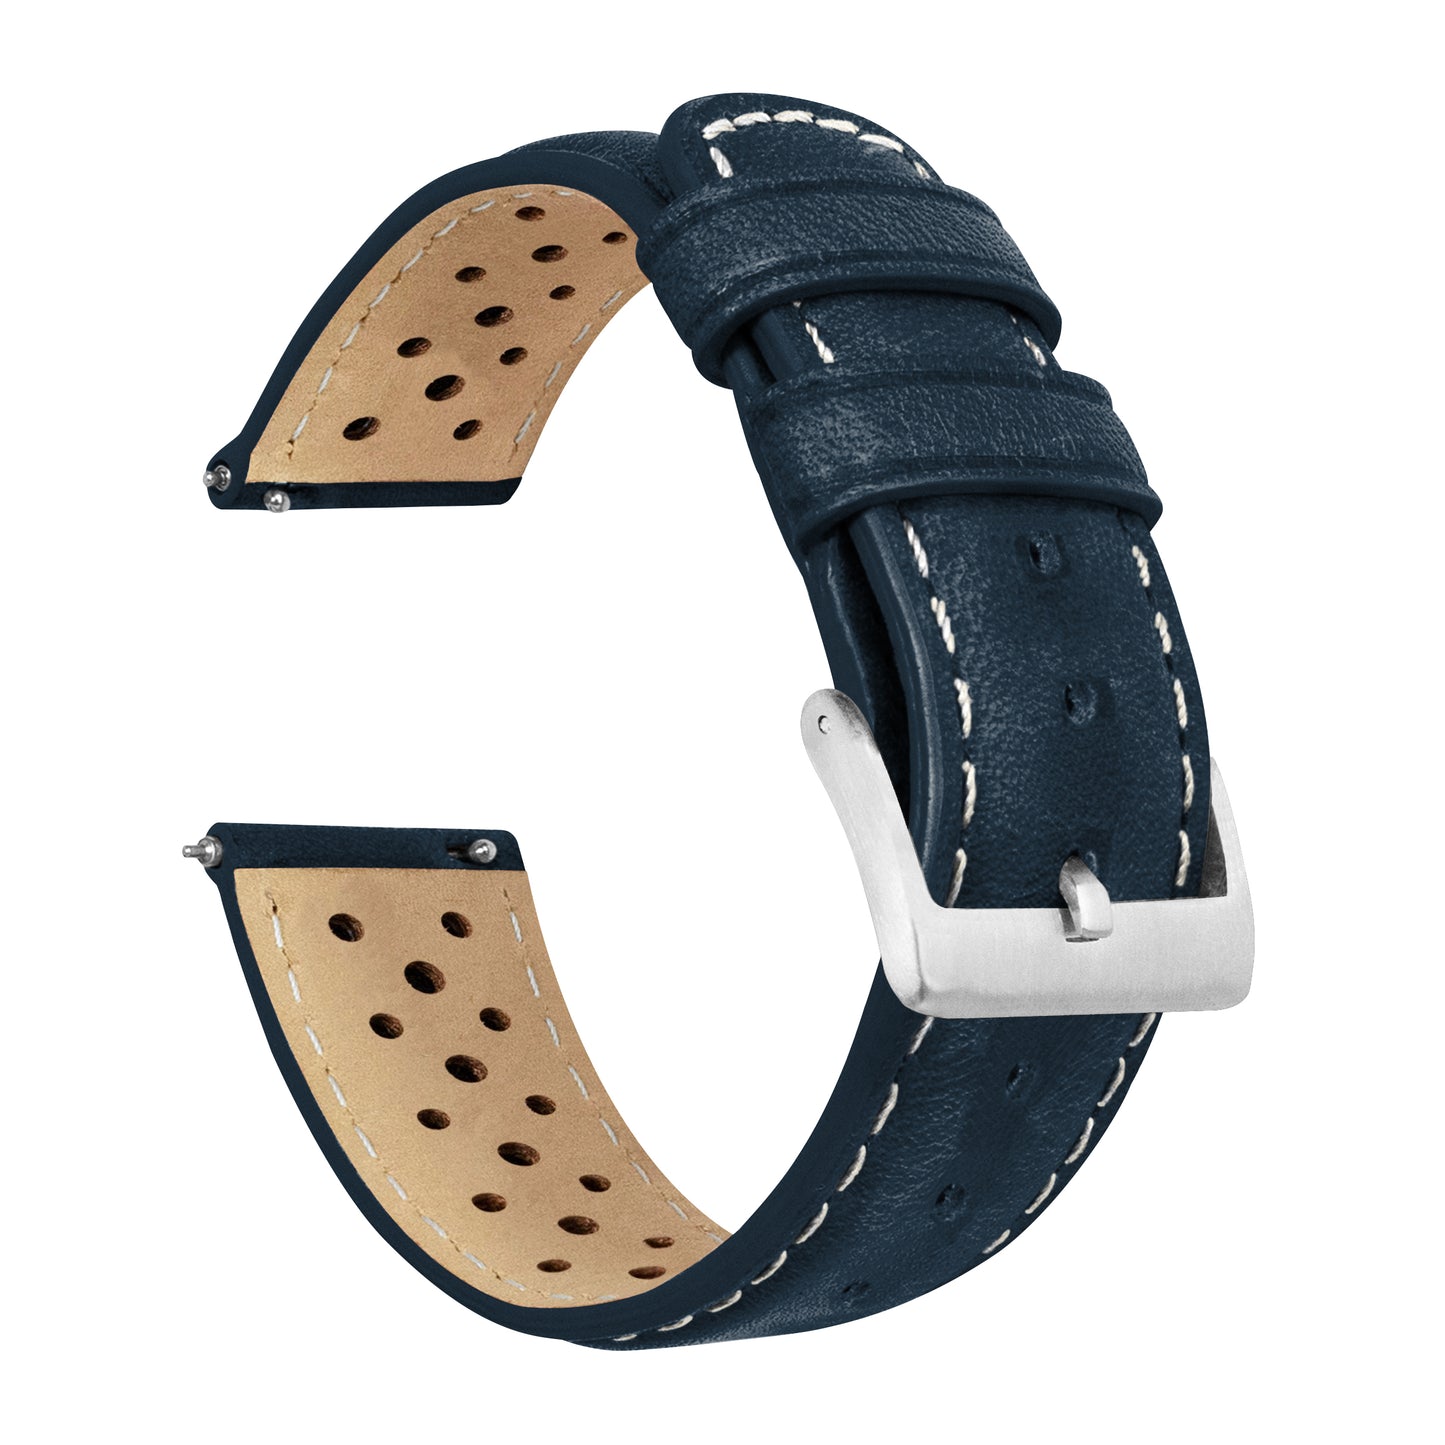 Huwawei Watch Racing Horween Leather Navy Blue Linen Stitch Watch Band